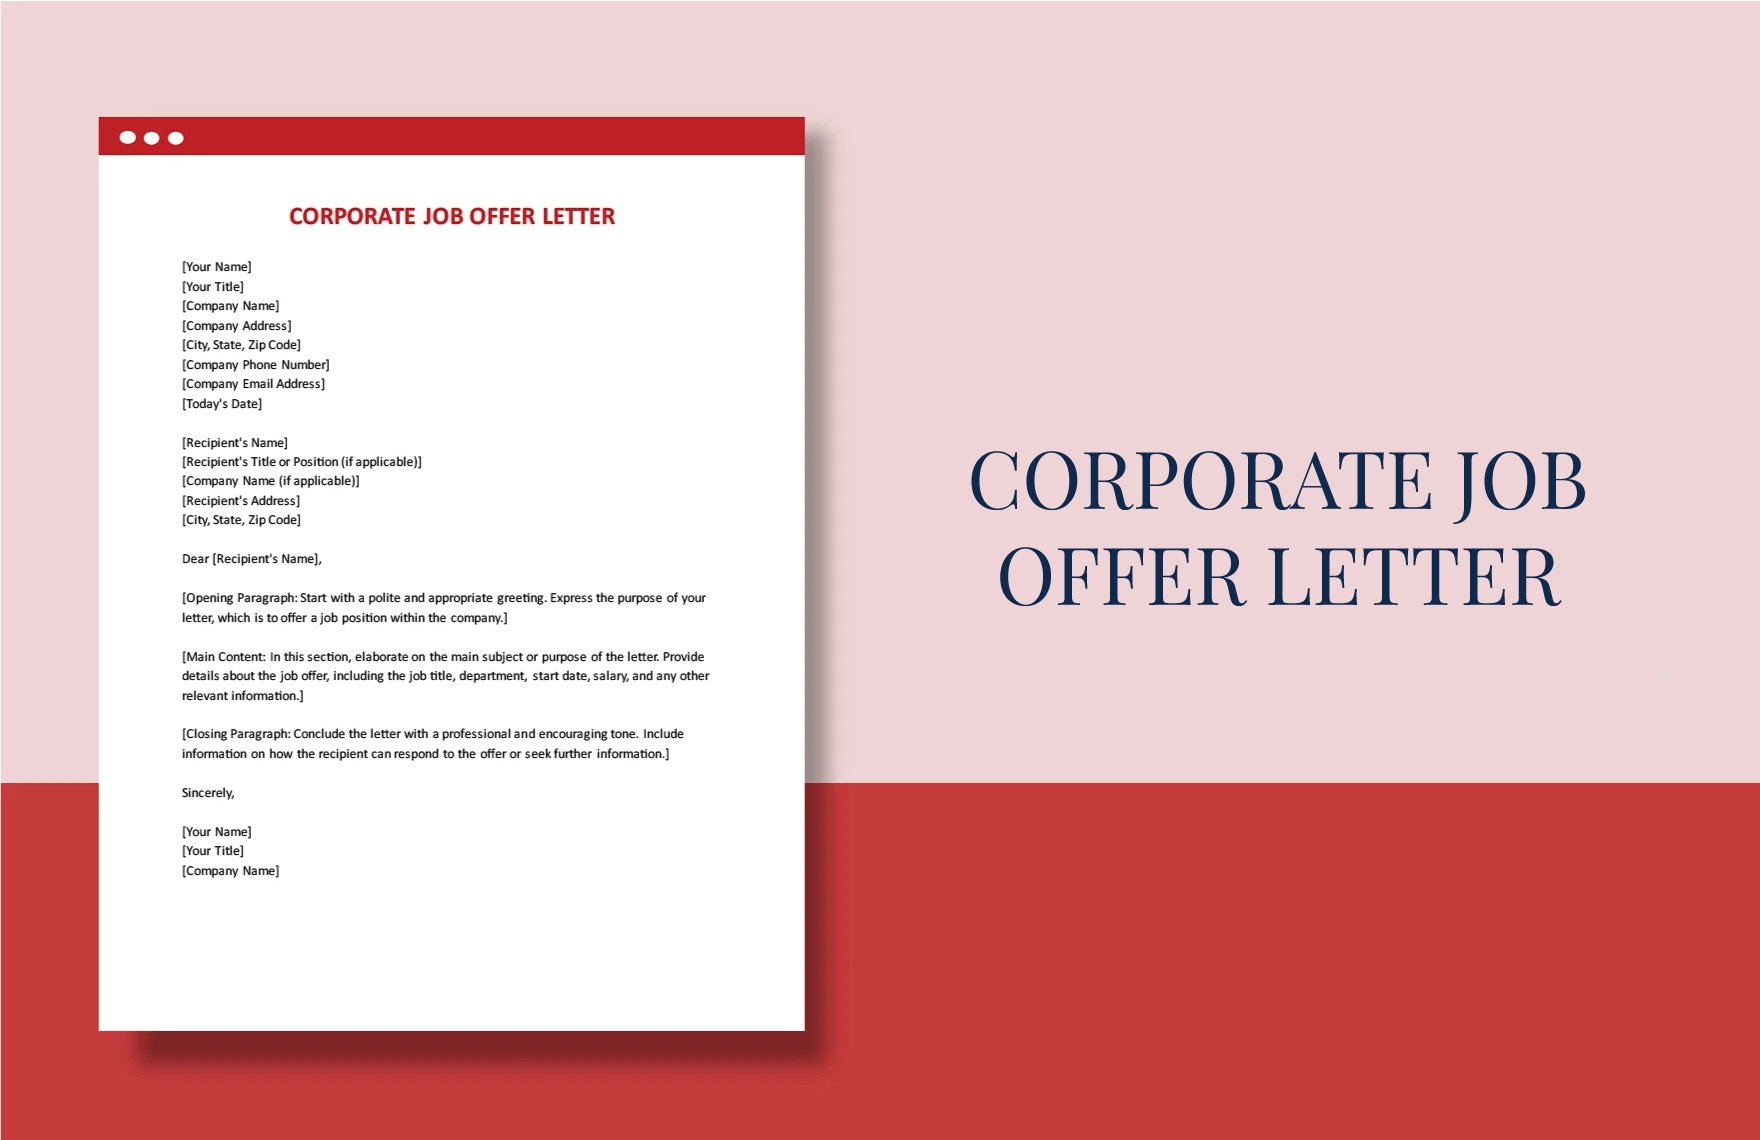 Corporate Job Offer Letter in Word, Google Docs, PDF